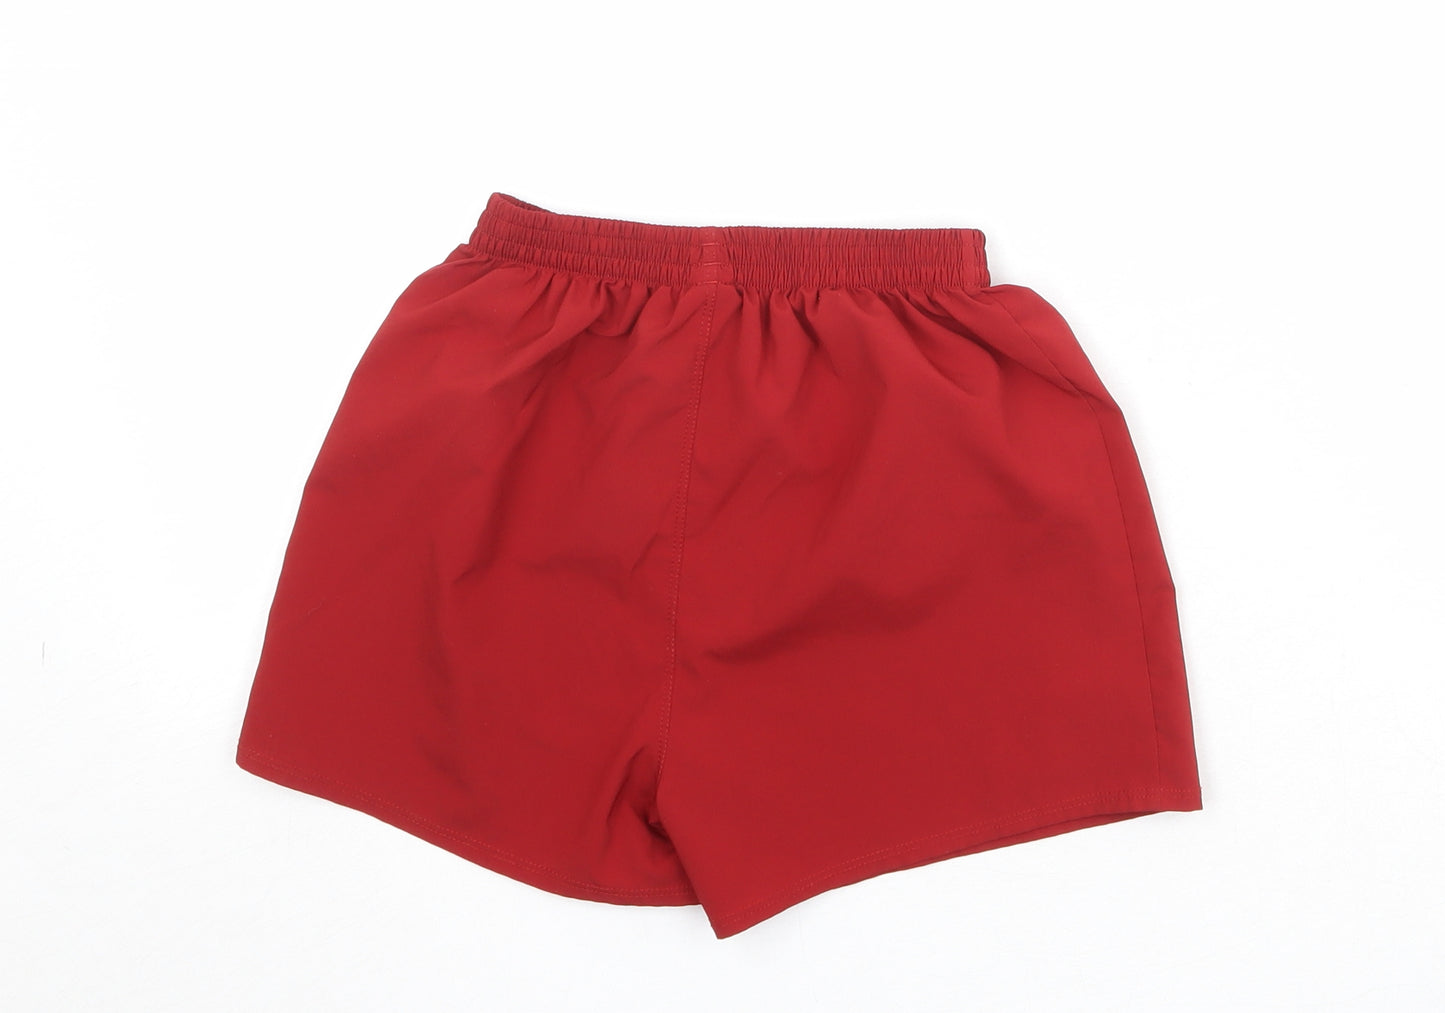 New Balance Boys Red Polyester Sweat Shorts Size 6-7 Years Regular - L.F.C.